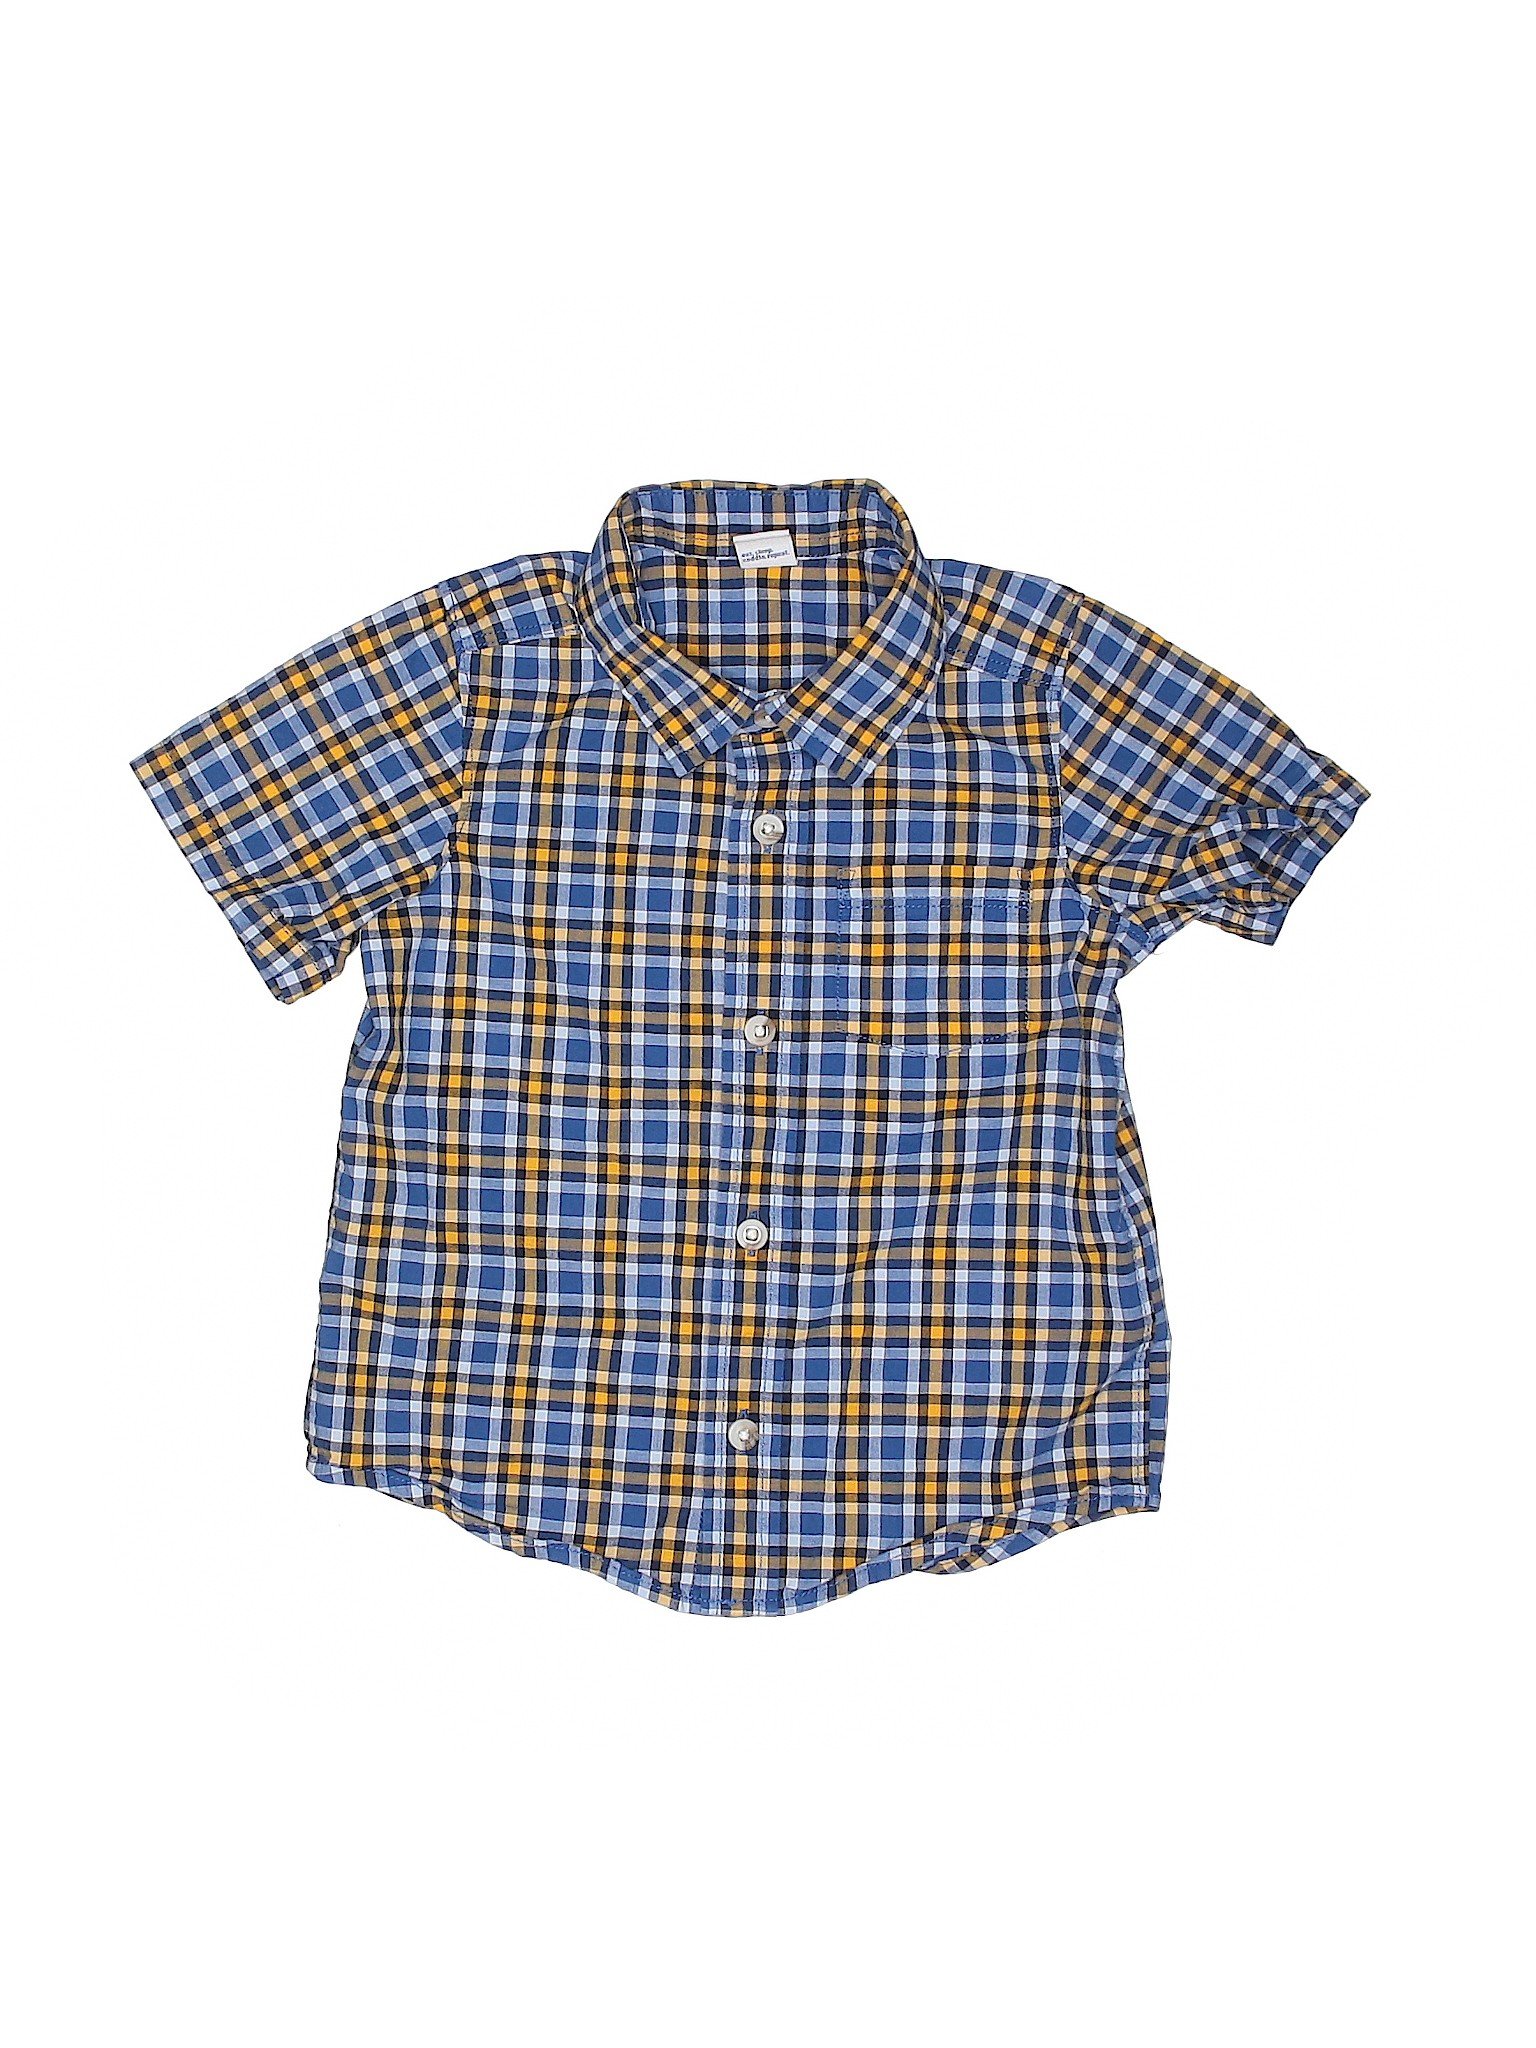 OshKosh B'gosh Boys Blue Short Sleeve Button-Down Shirt 2T | eBay